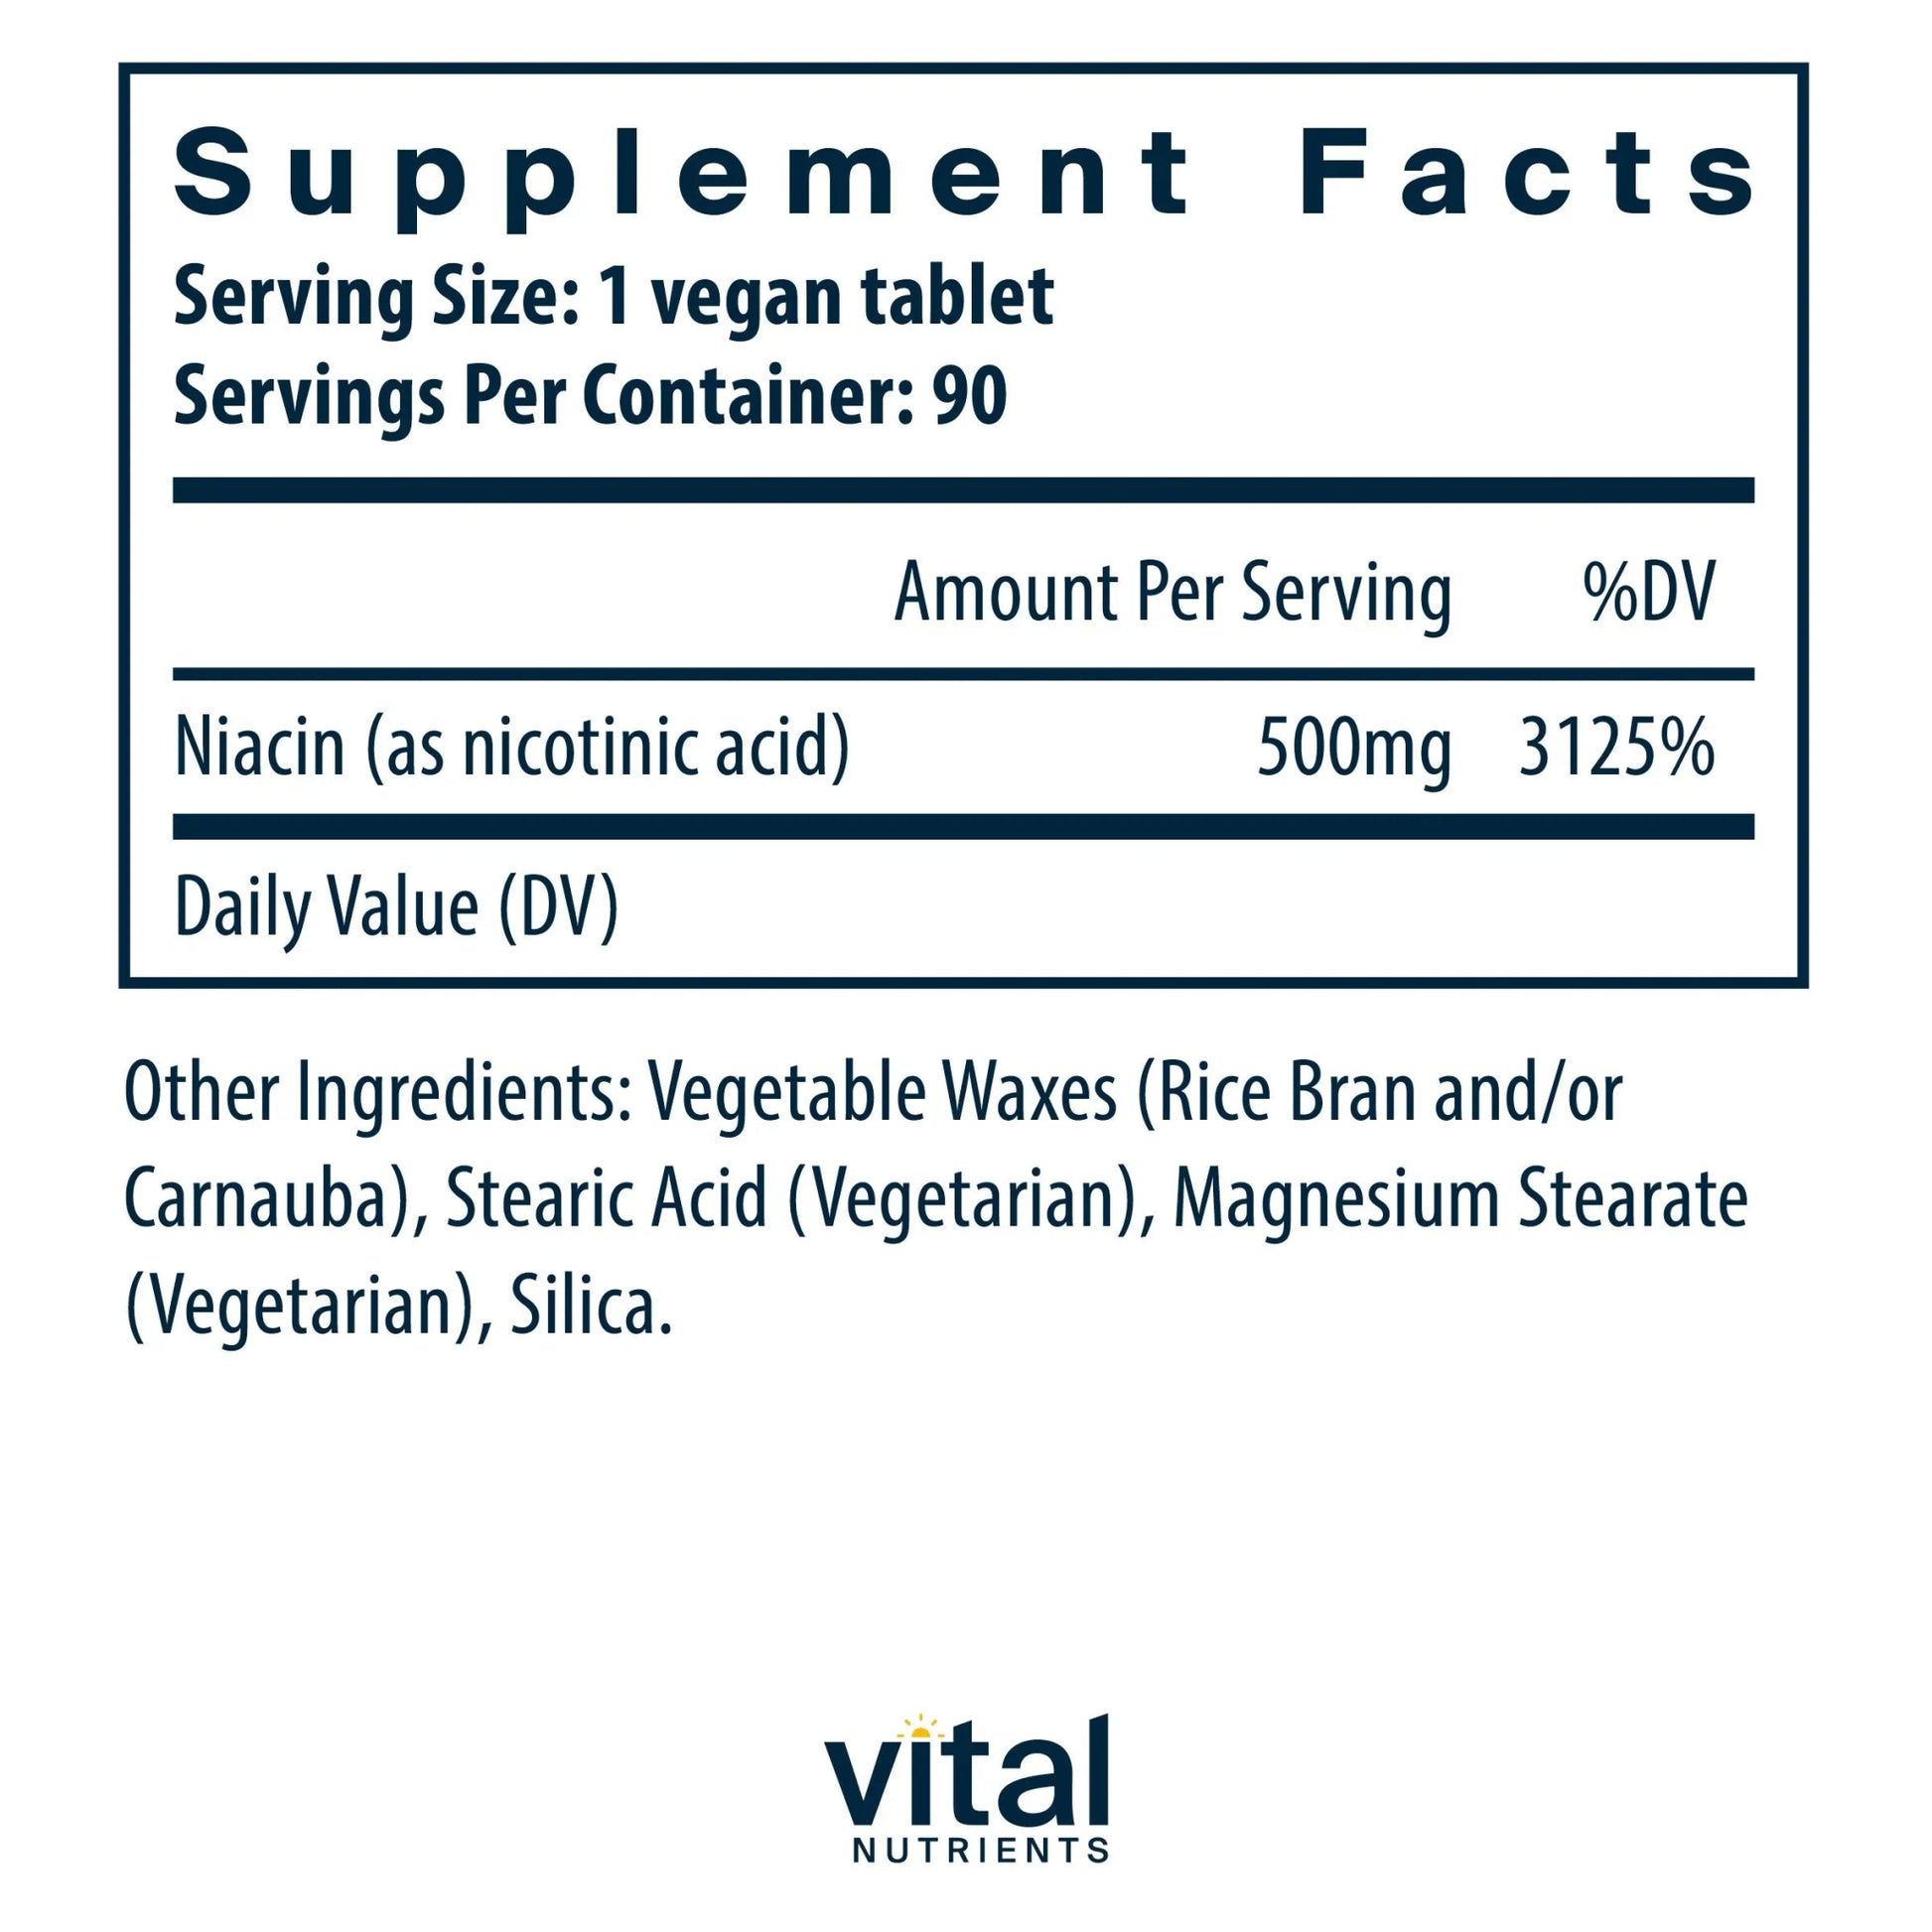 Niacin 500mg (Vital Nutrition) - HAPIVERI